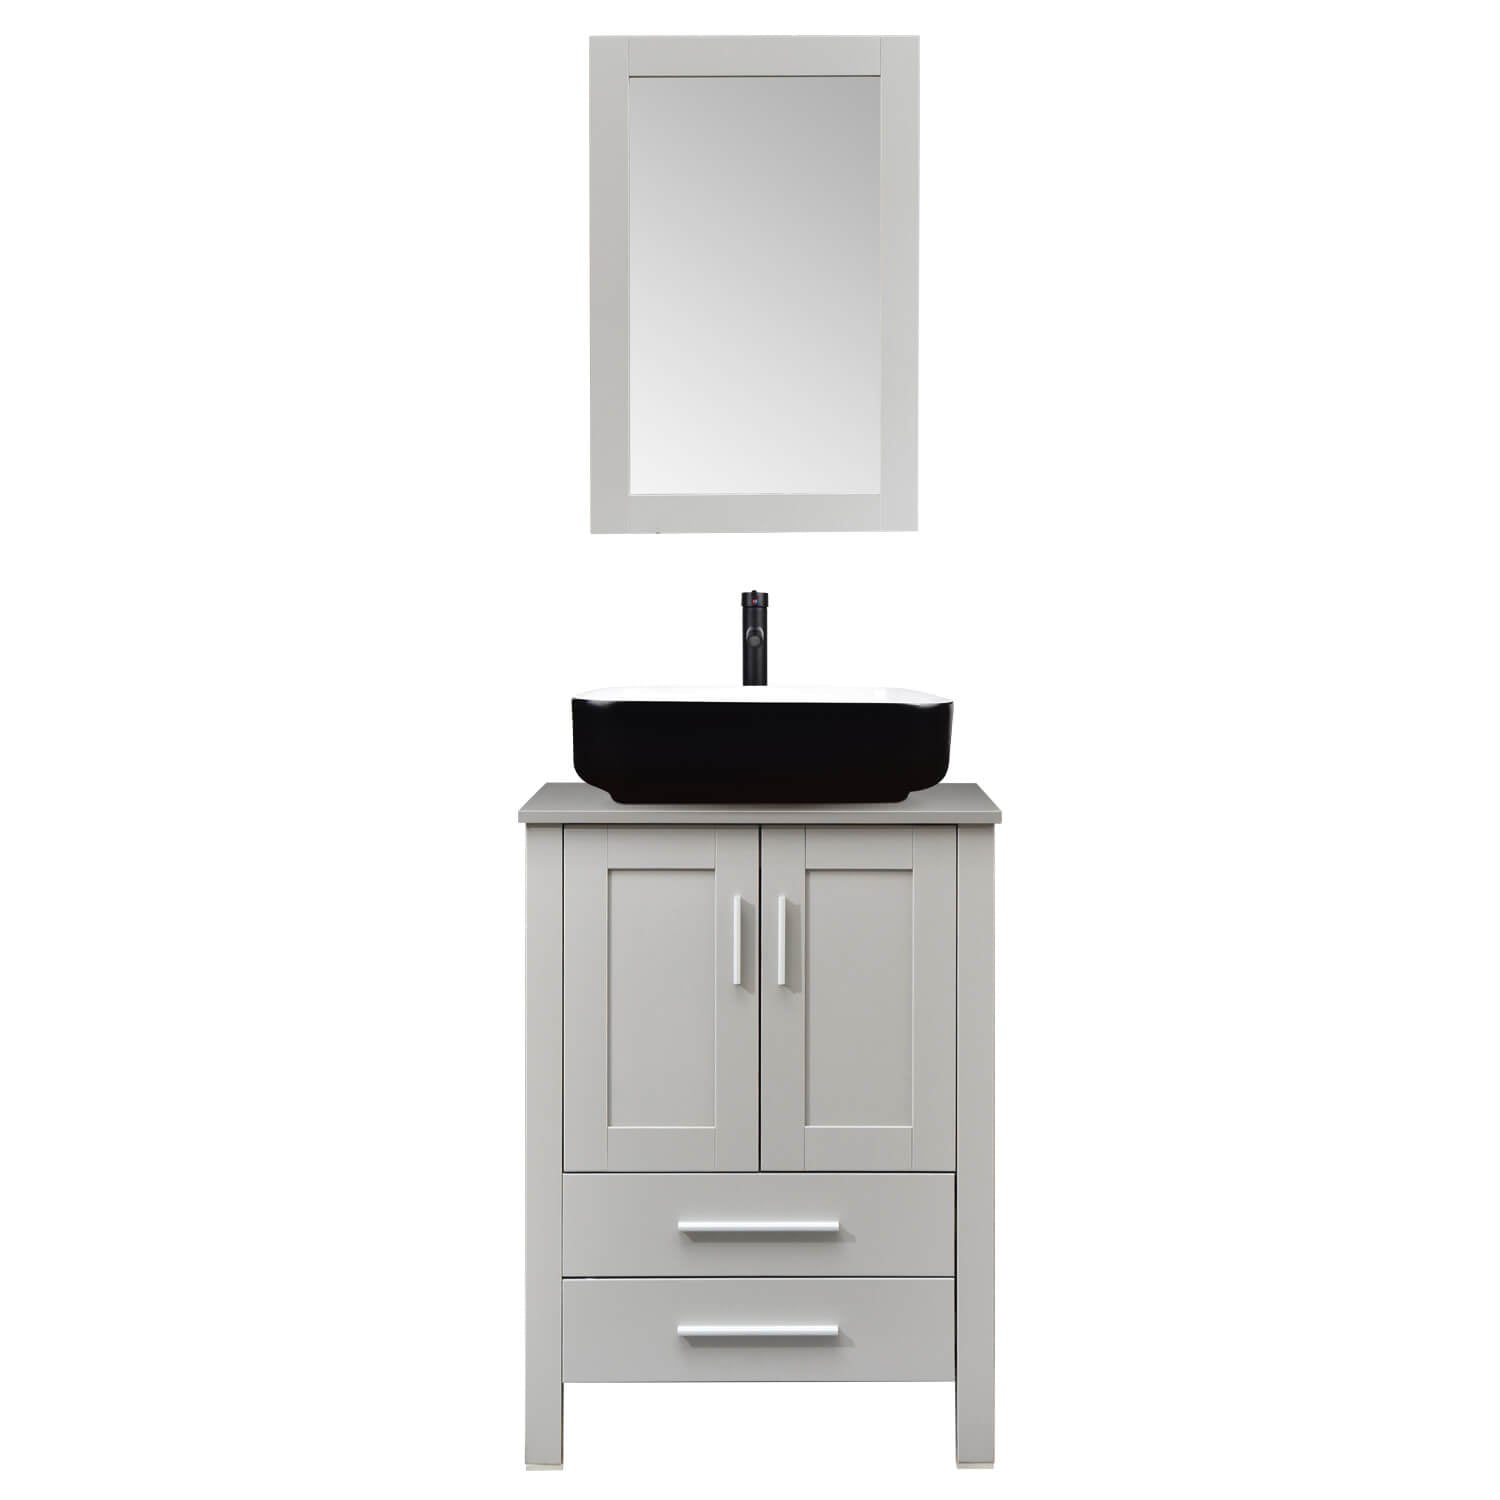 Elecwish gray wood bathroom vanity with black ceramic sink HW1124 in white bacckground